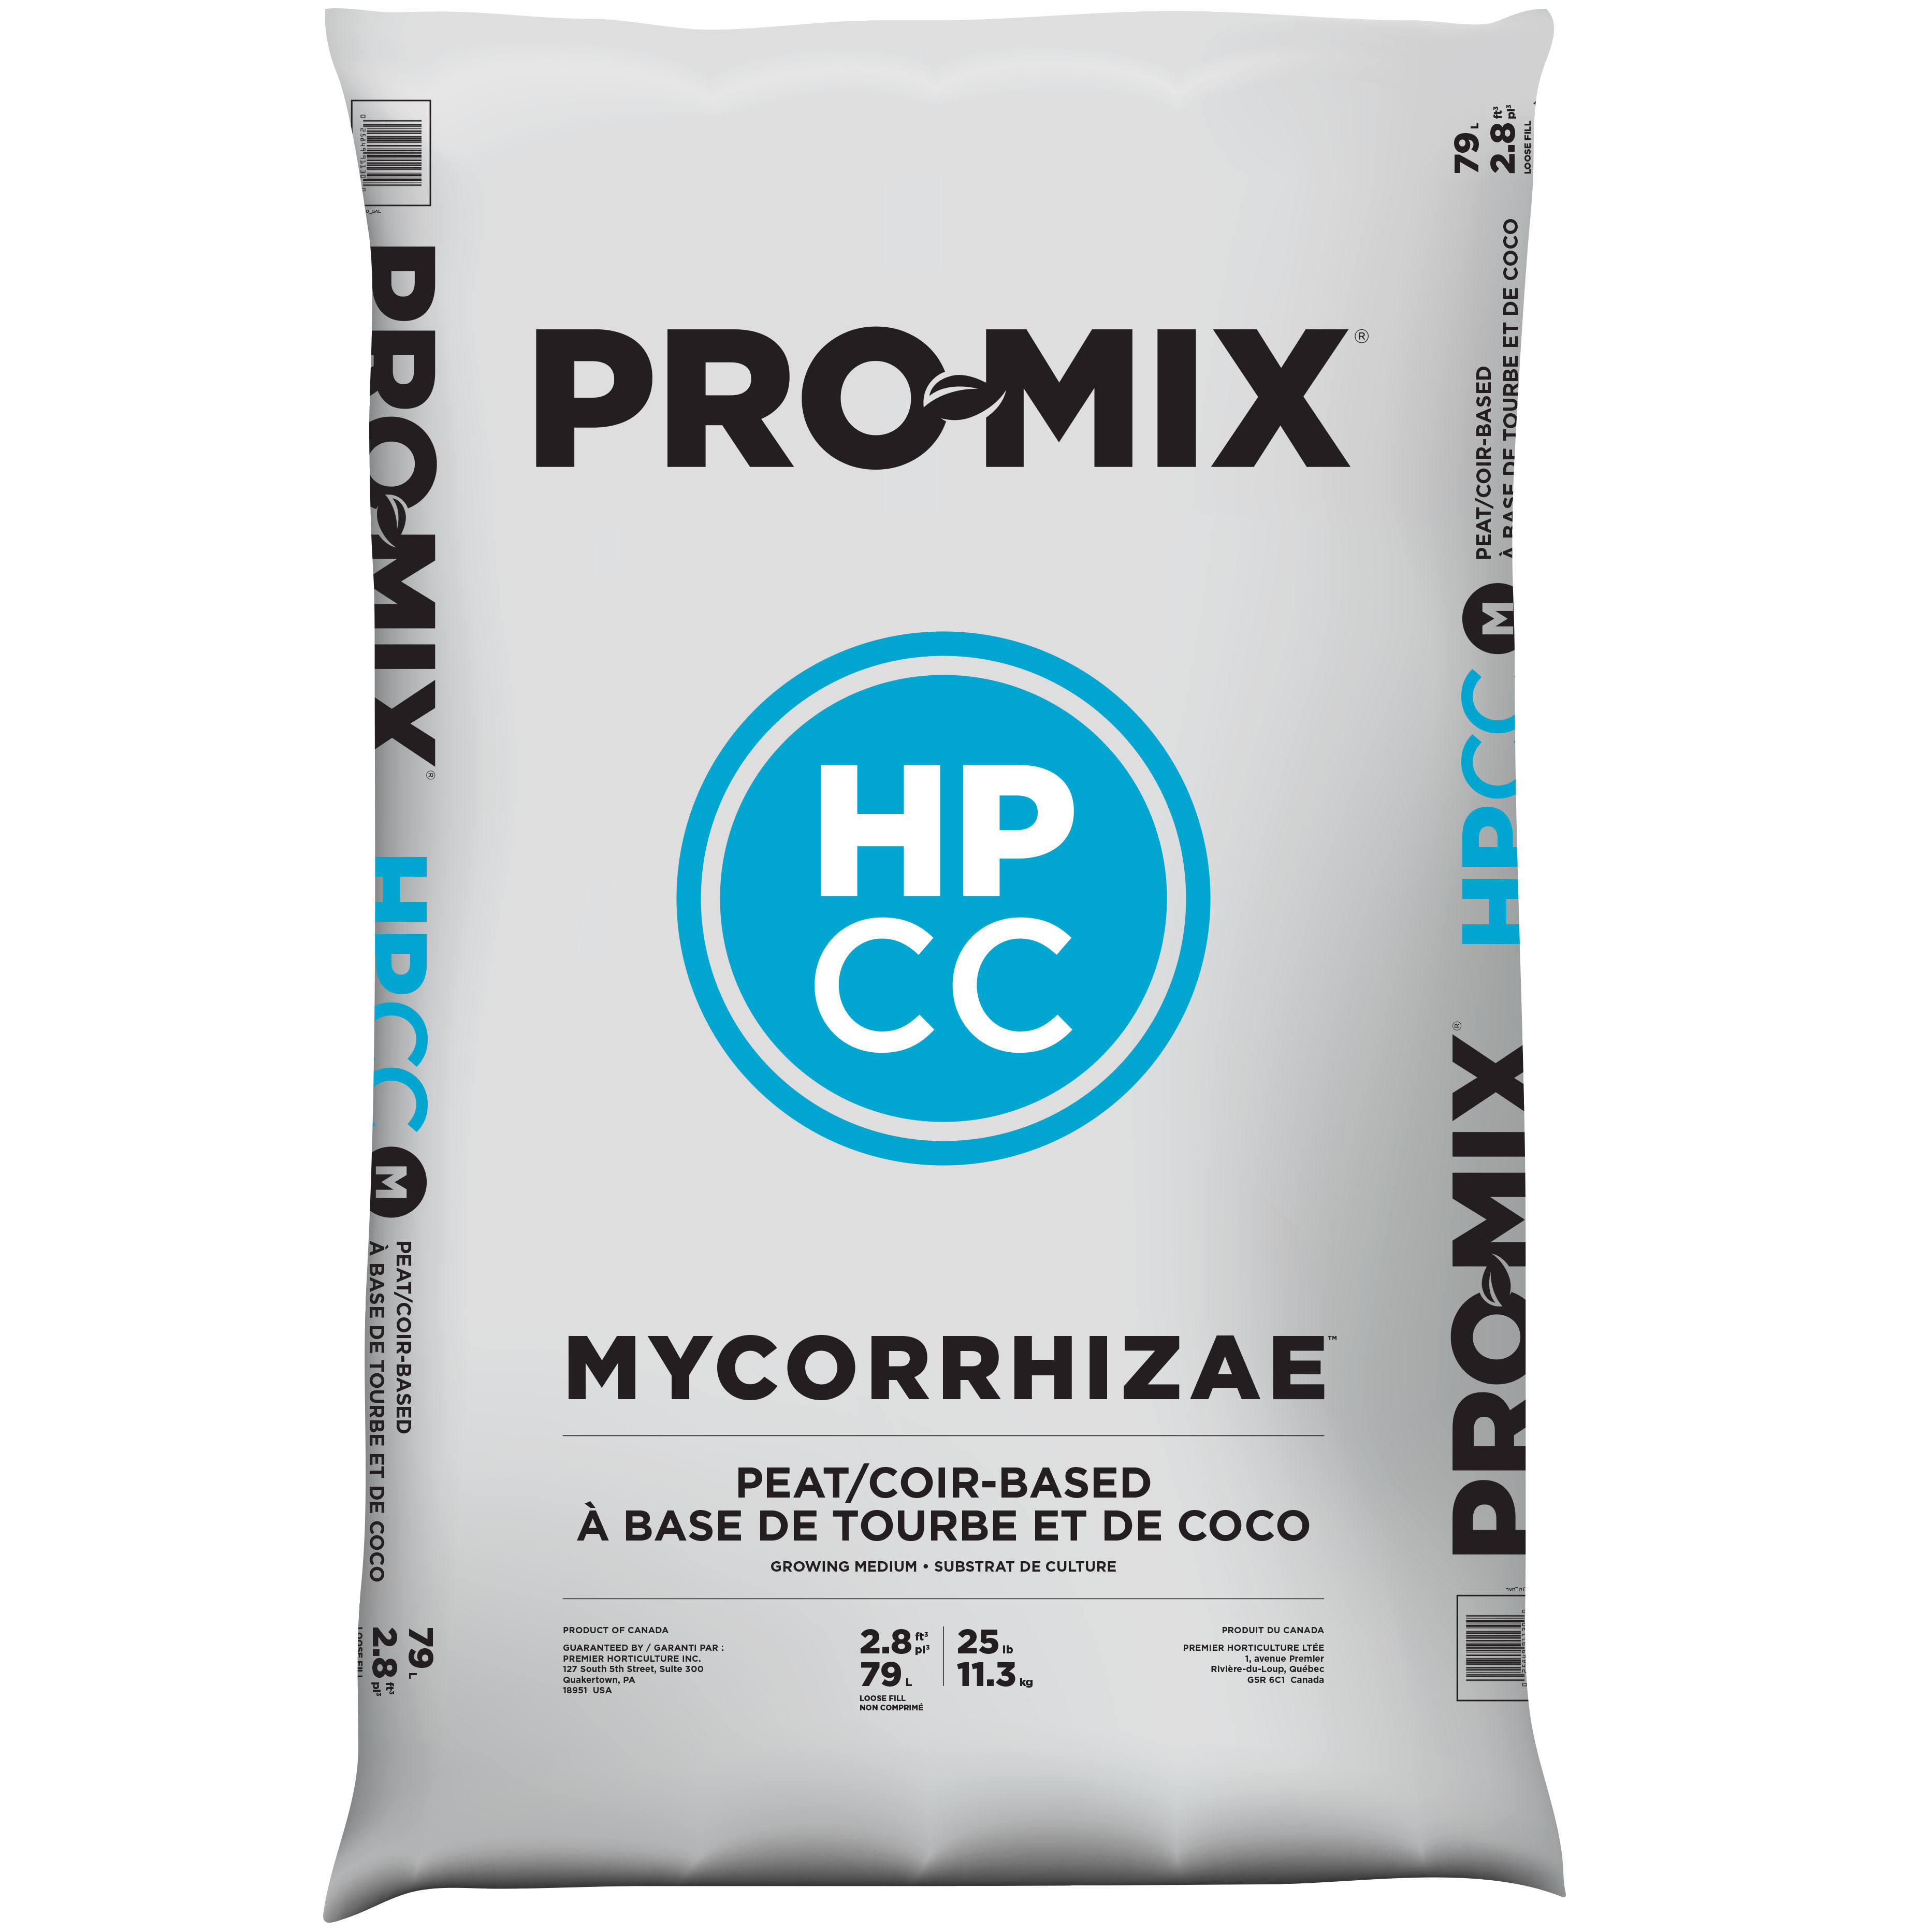 Premier Horticulture 2028130 RG Pro Mix HP CC Mycorrhizae High Porosity Grower Mix, 2.8 cu. ft.